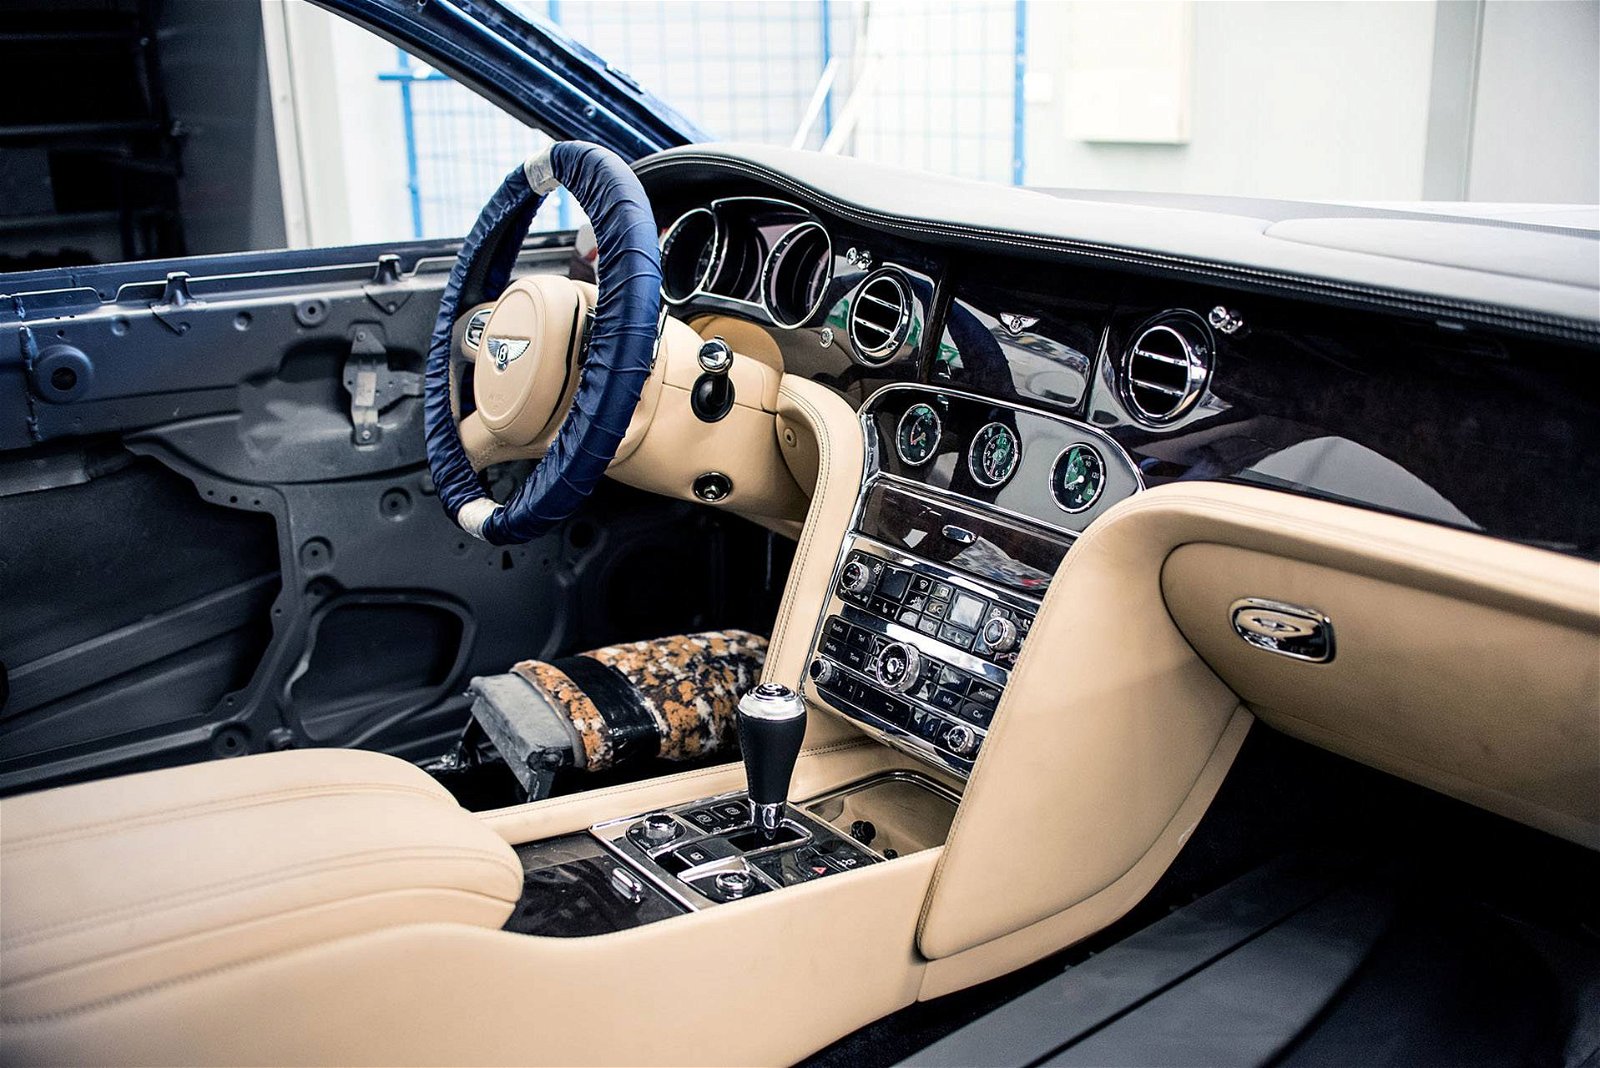 Bentley-Mulsanne-Coupe-conversion-by-McChip-DKR-16